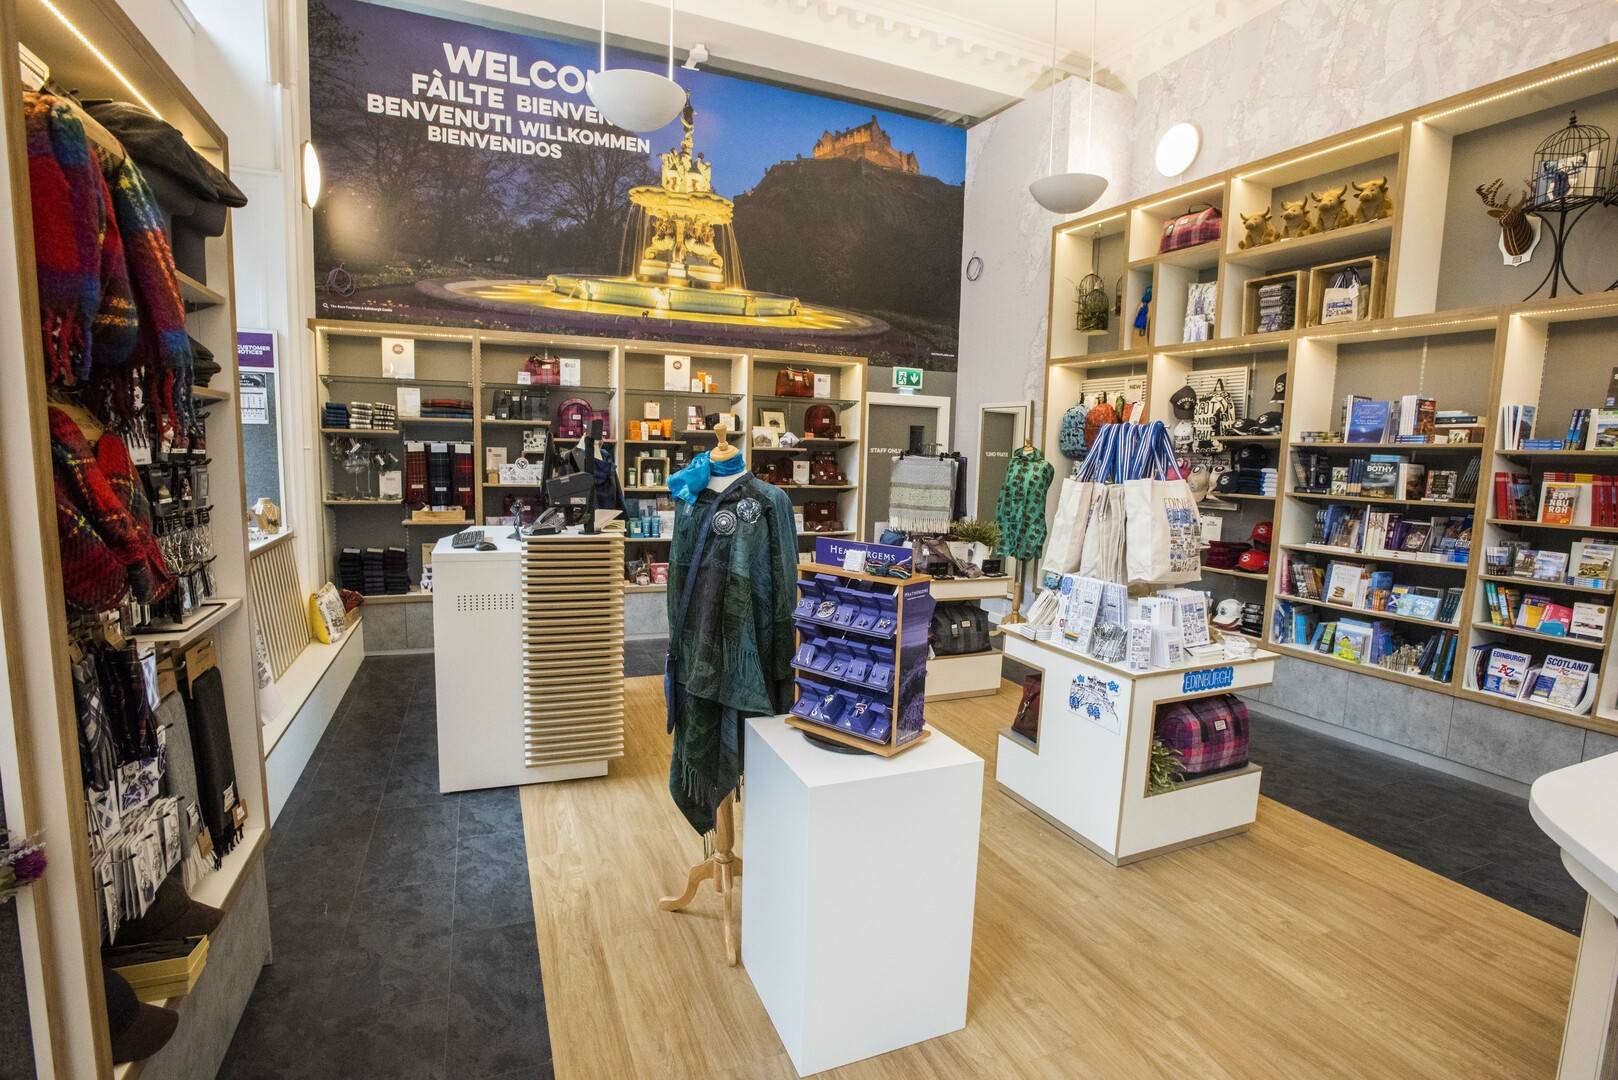 Edinburgh VisitScotland iCentre interior of store